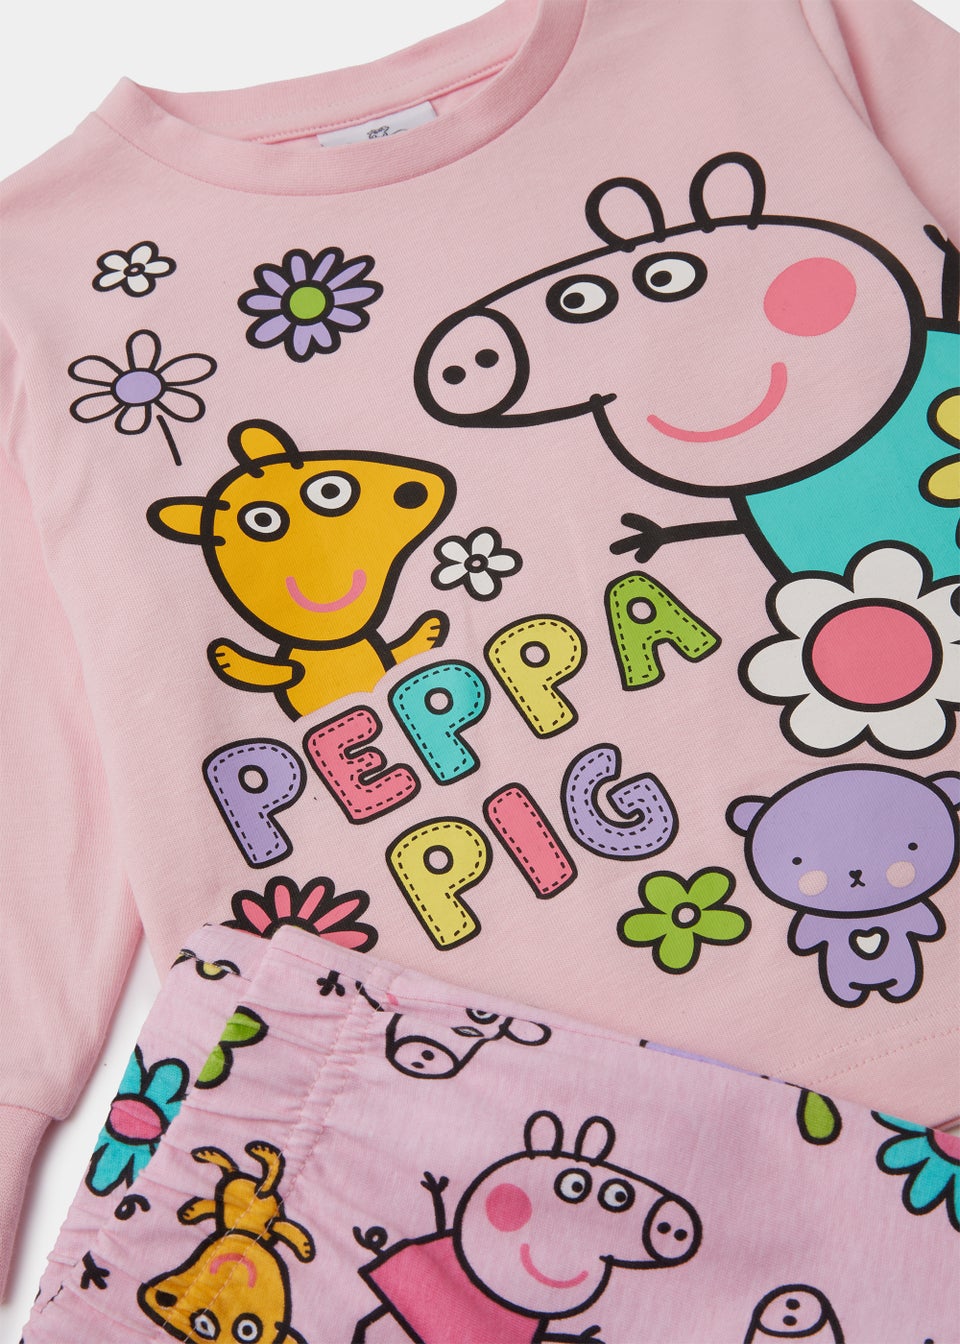 Kids Pink Peppa Pig Floral Pyjama Set (9mths-5yrs)